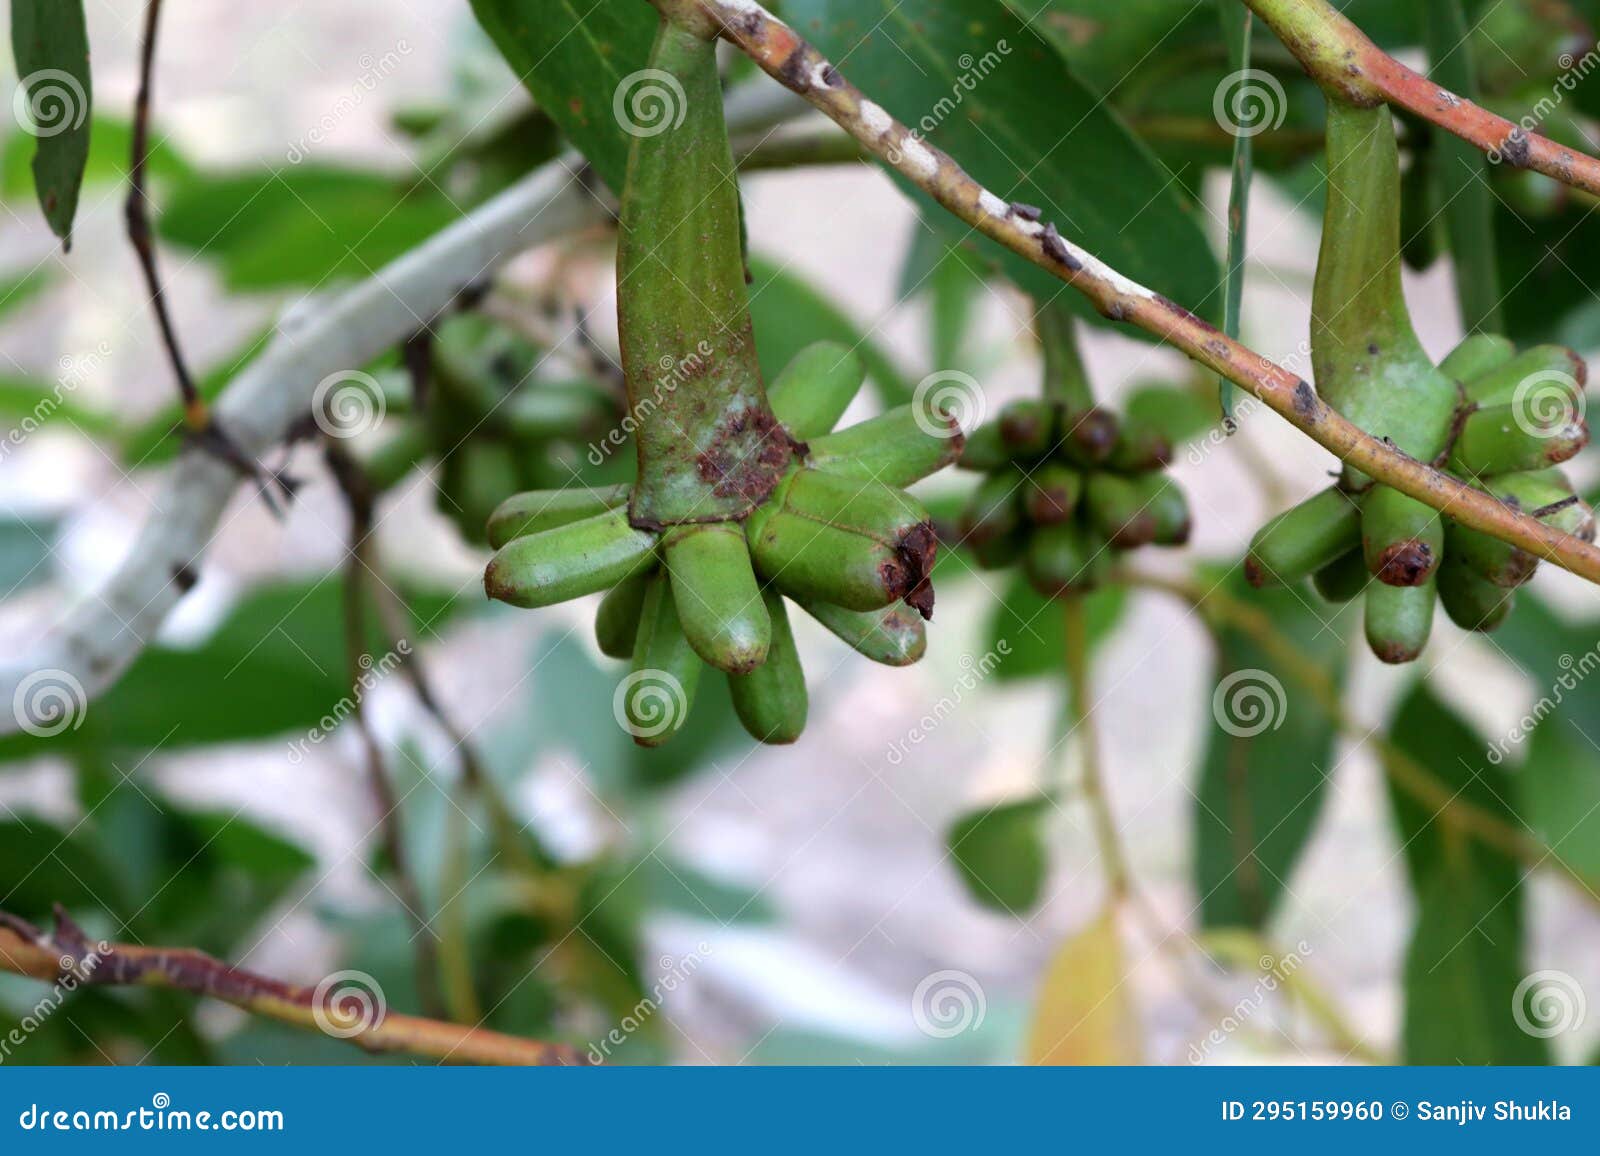 bushy yate (eucalyptus lehmannii) immature flower buds on a tree : (pix sanjiv shukla)